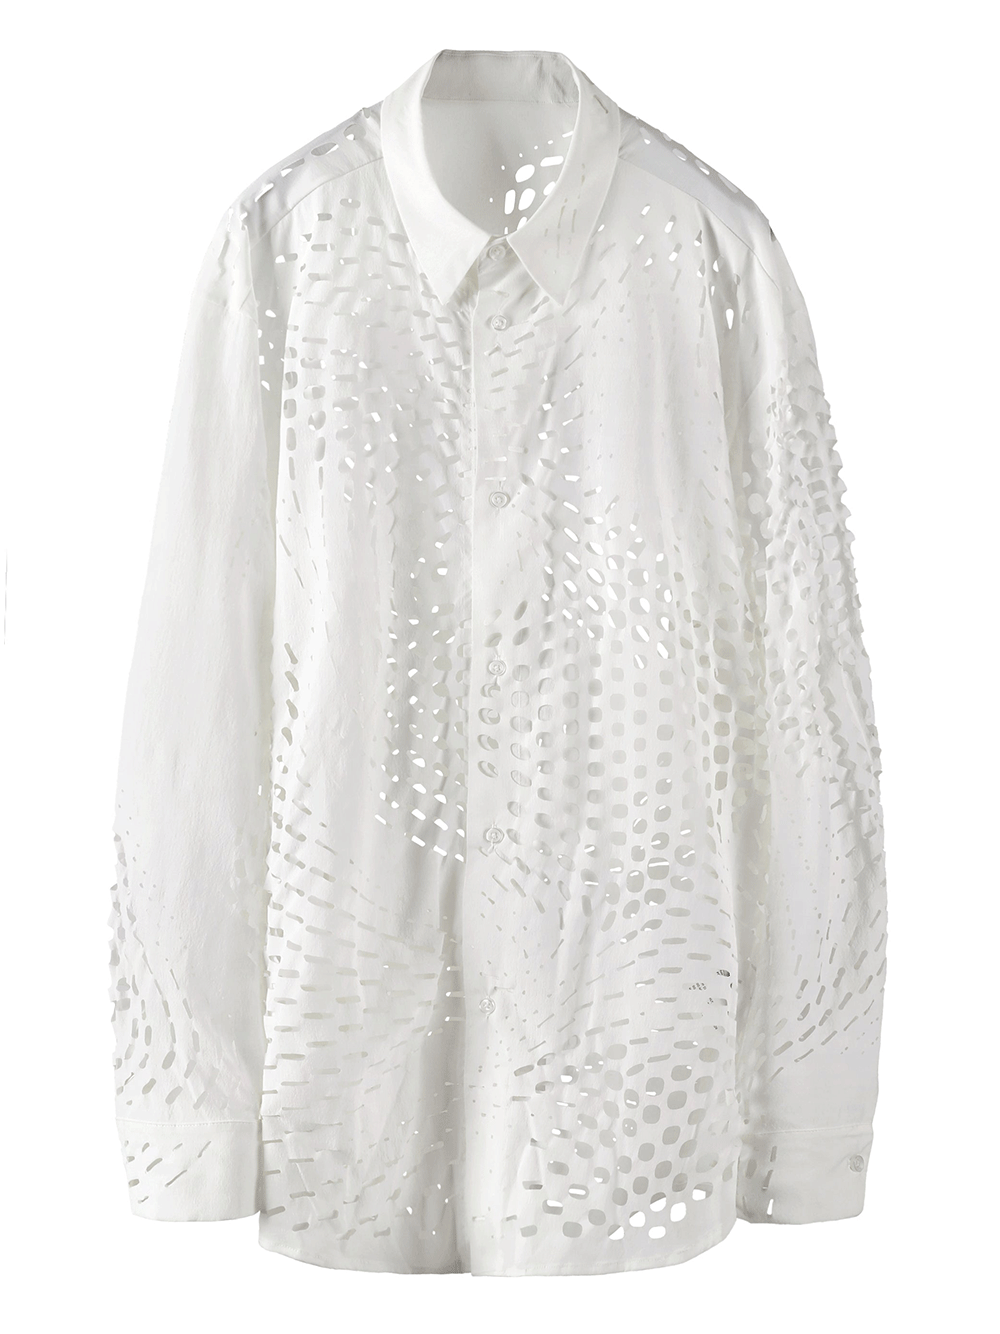 POST-ARCHIVE-FACTION-5.1-Shirt-Left-White-1